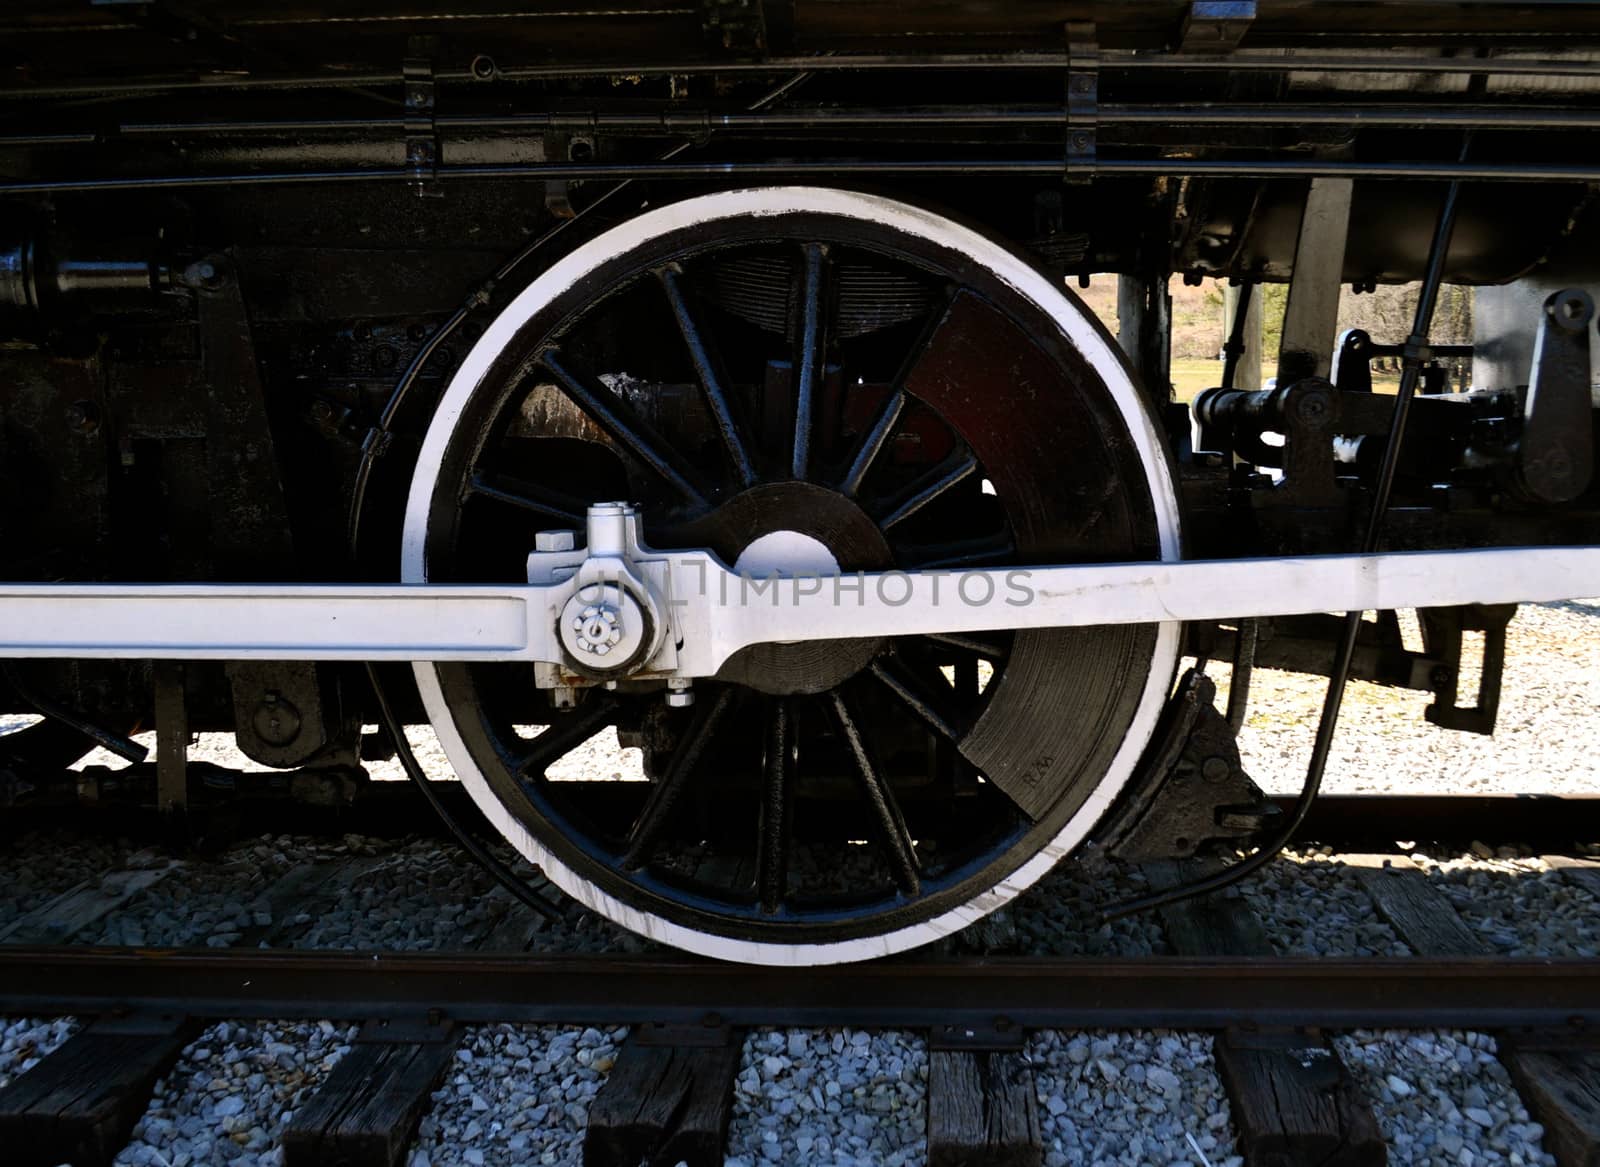 Locomotive Wheel 2 by RefocusPhoto